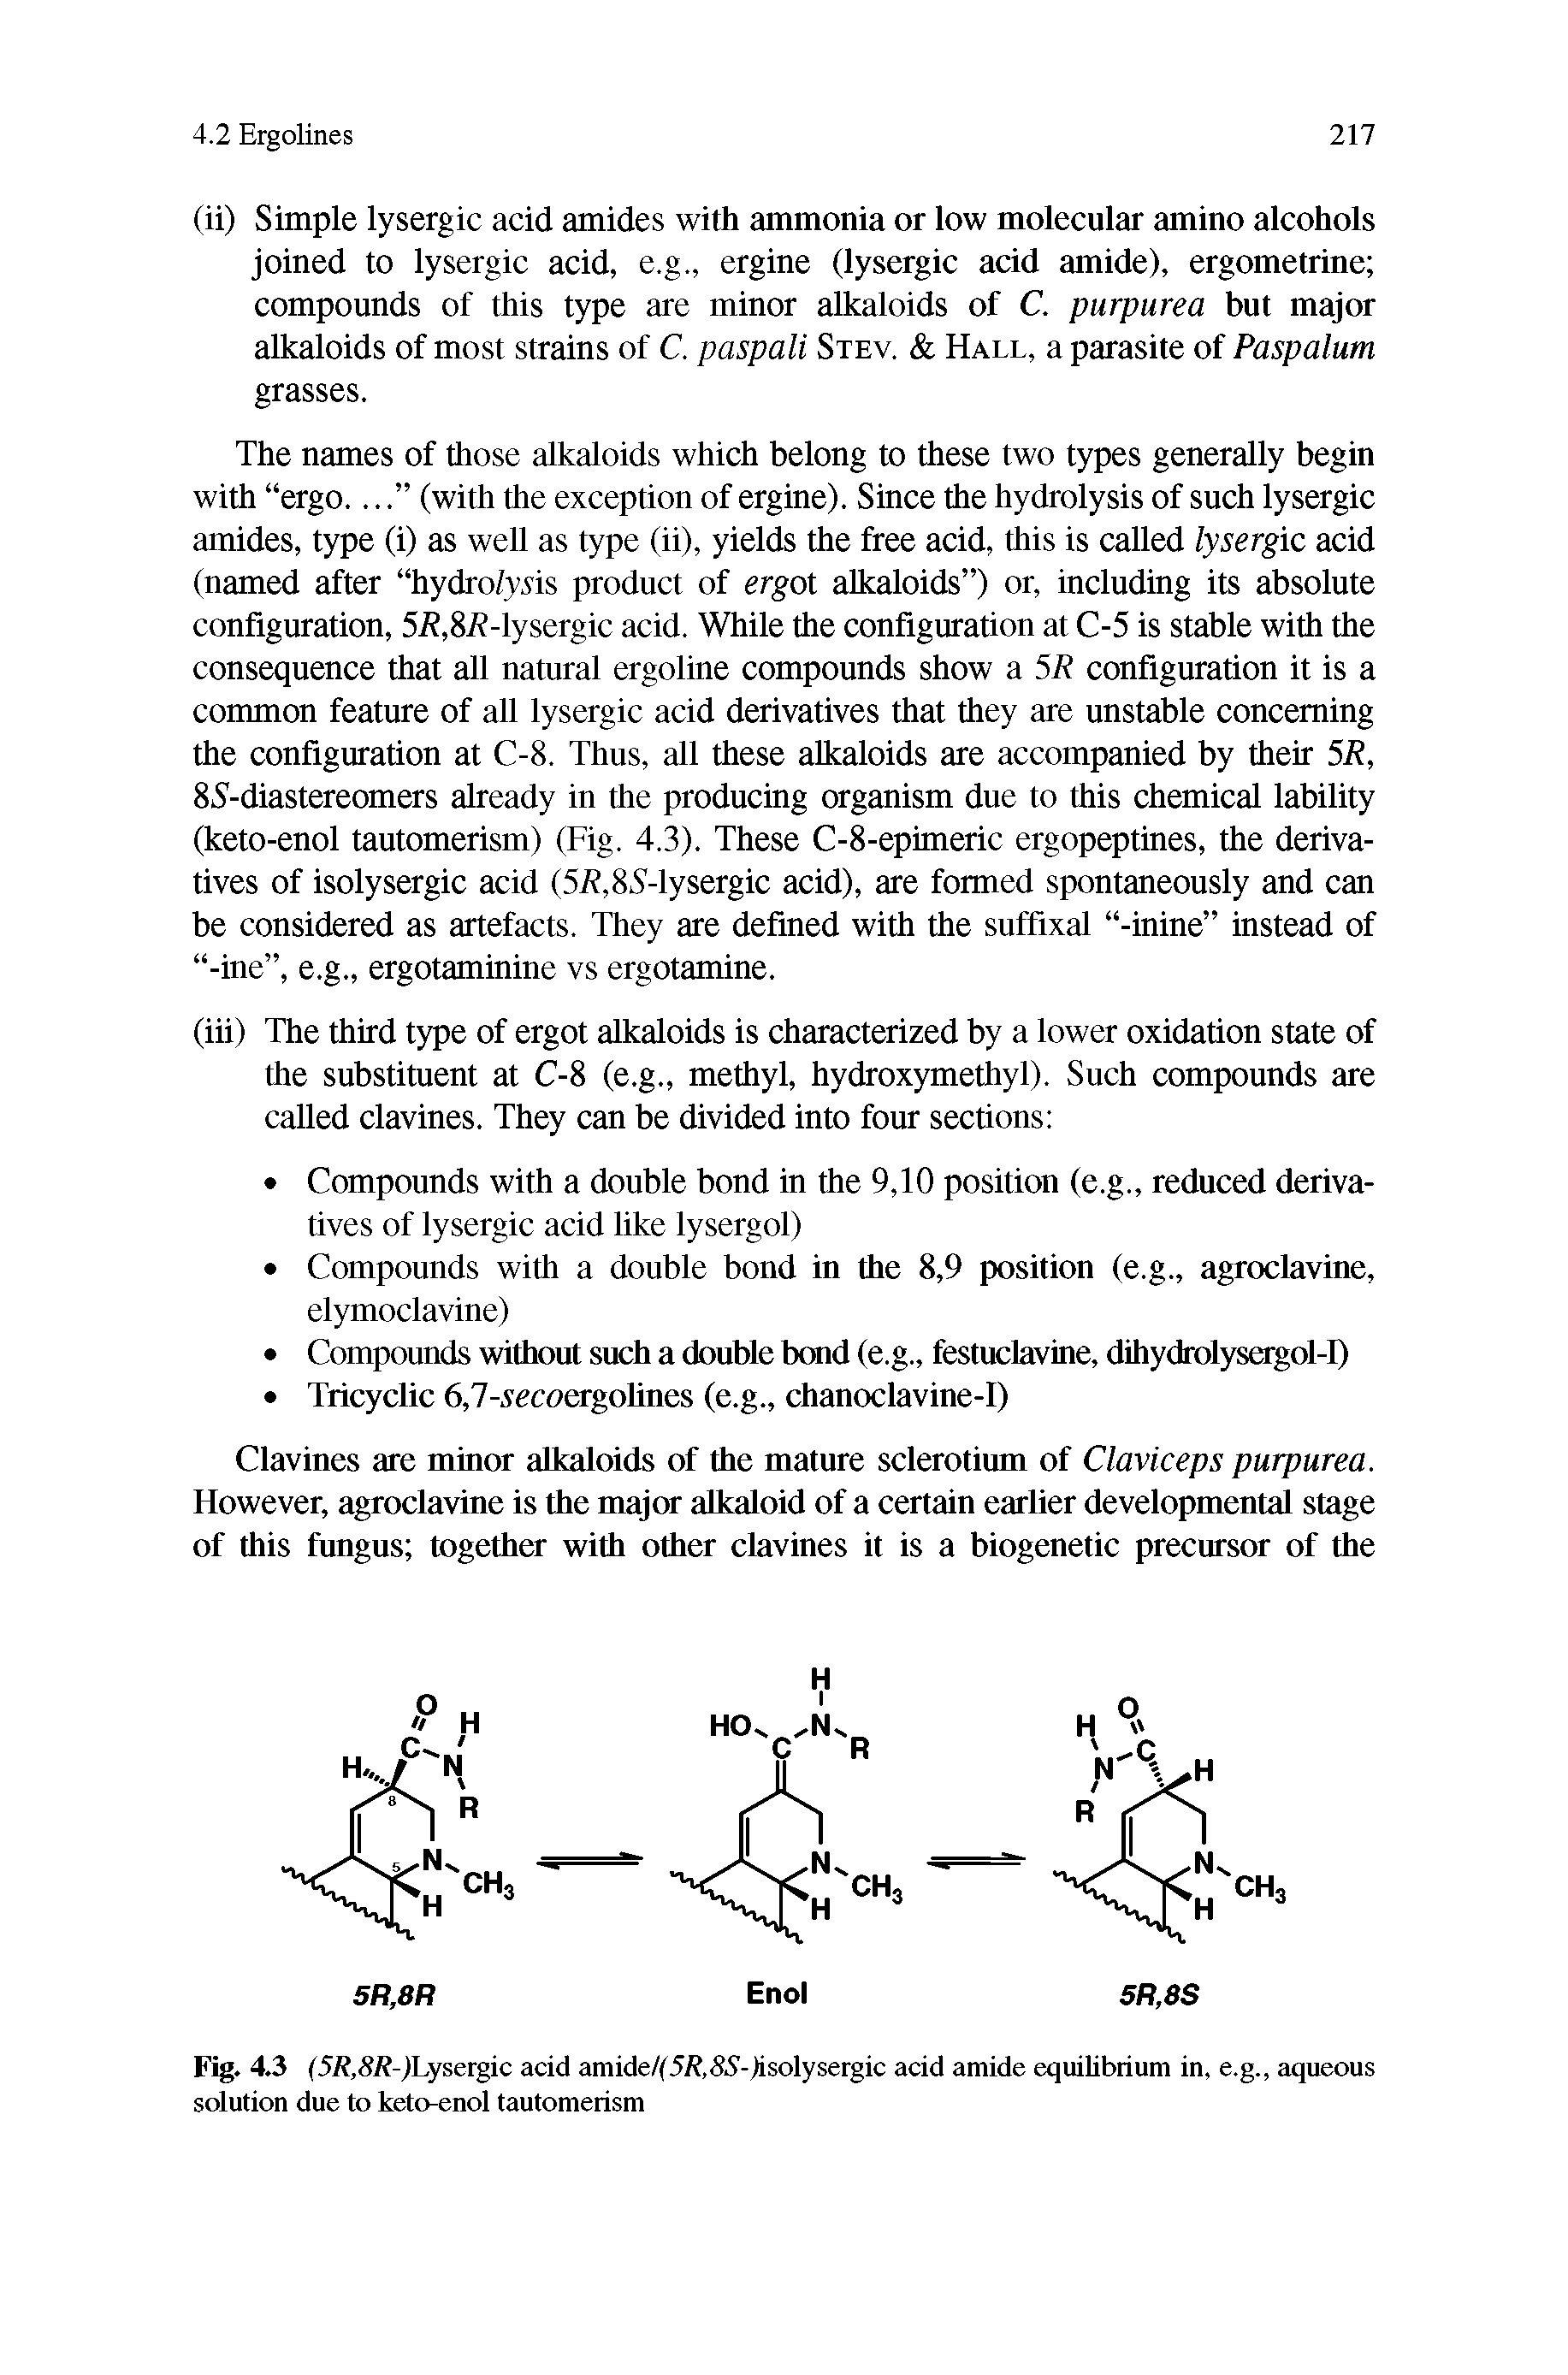 Fig. 4.3 (5/J,S/J-)Lyseigic acid amide/t5/J,5y-lisolysergic acid amide equilibrium in, e.g., aqueous solution due to keto-enol tautomerism...